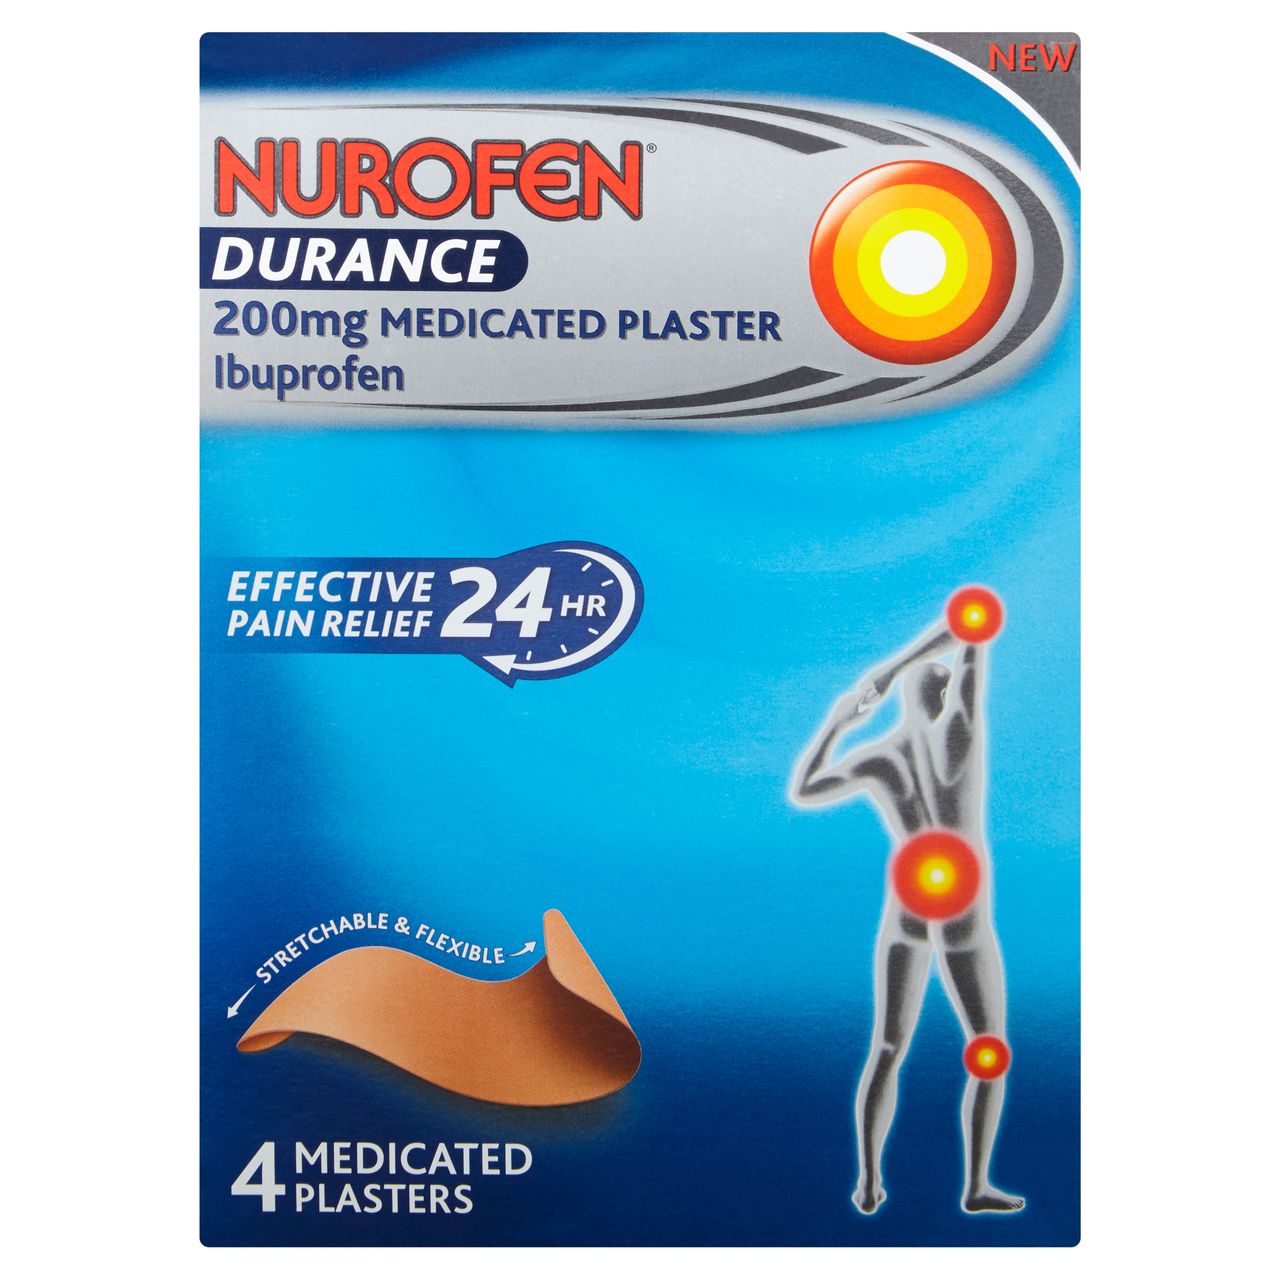 Nurofen Durance 200mg Medicated Plaster